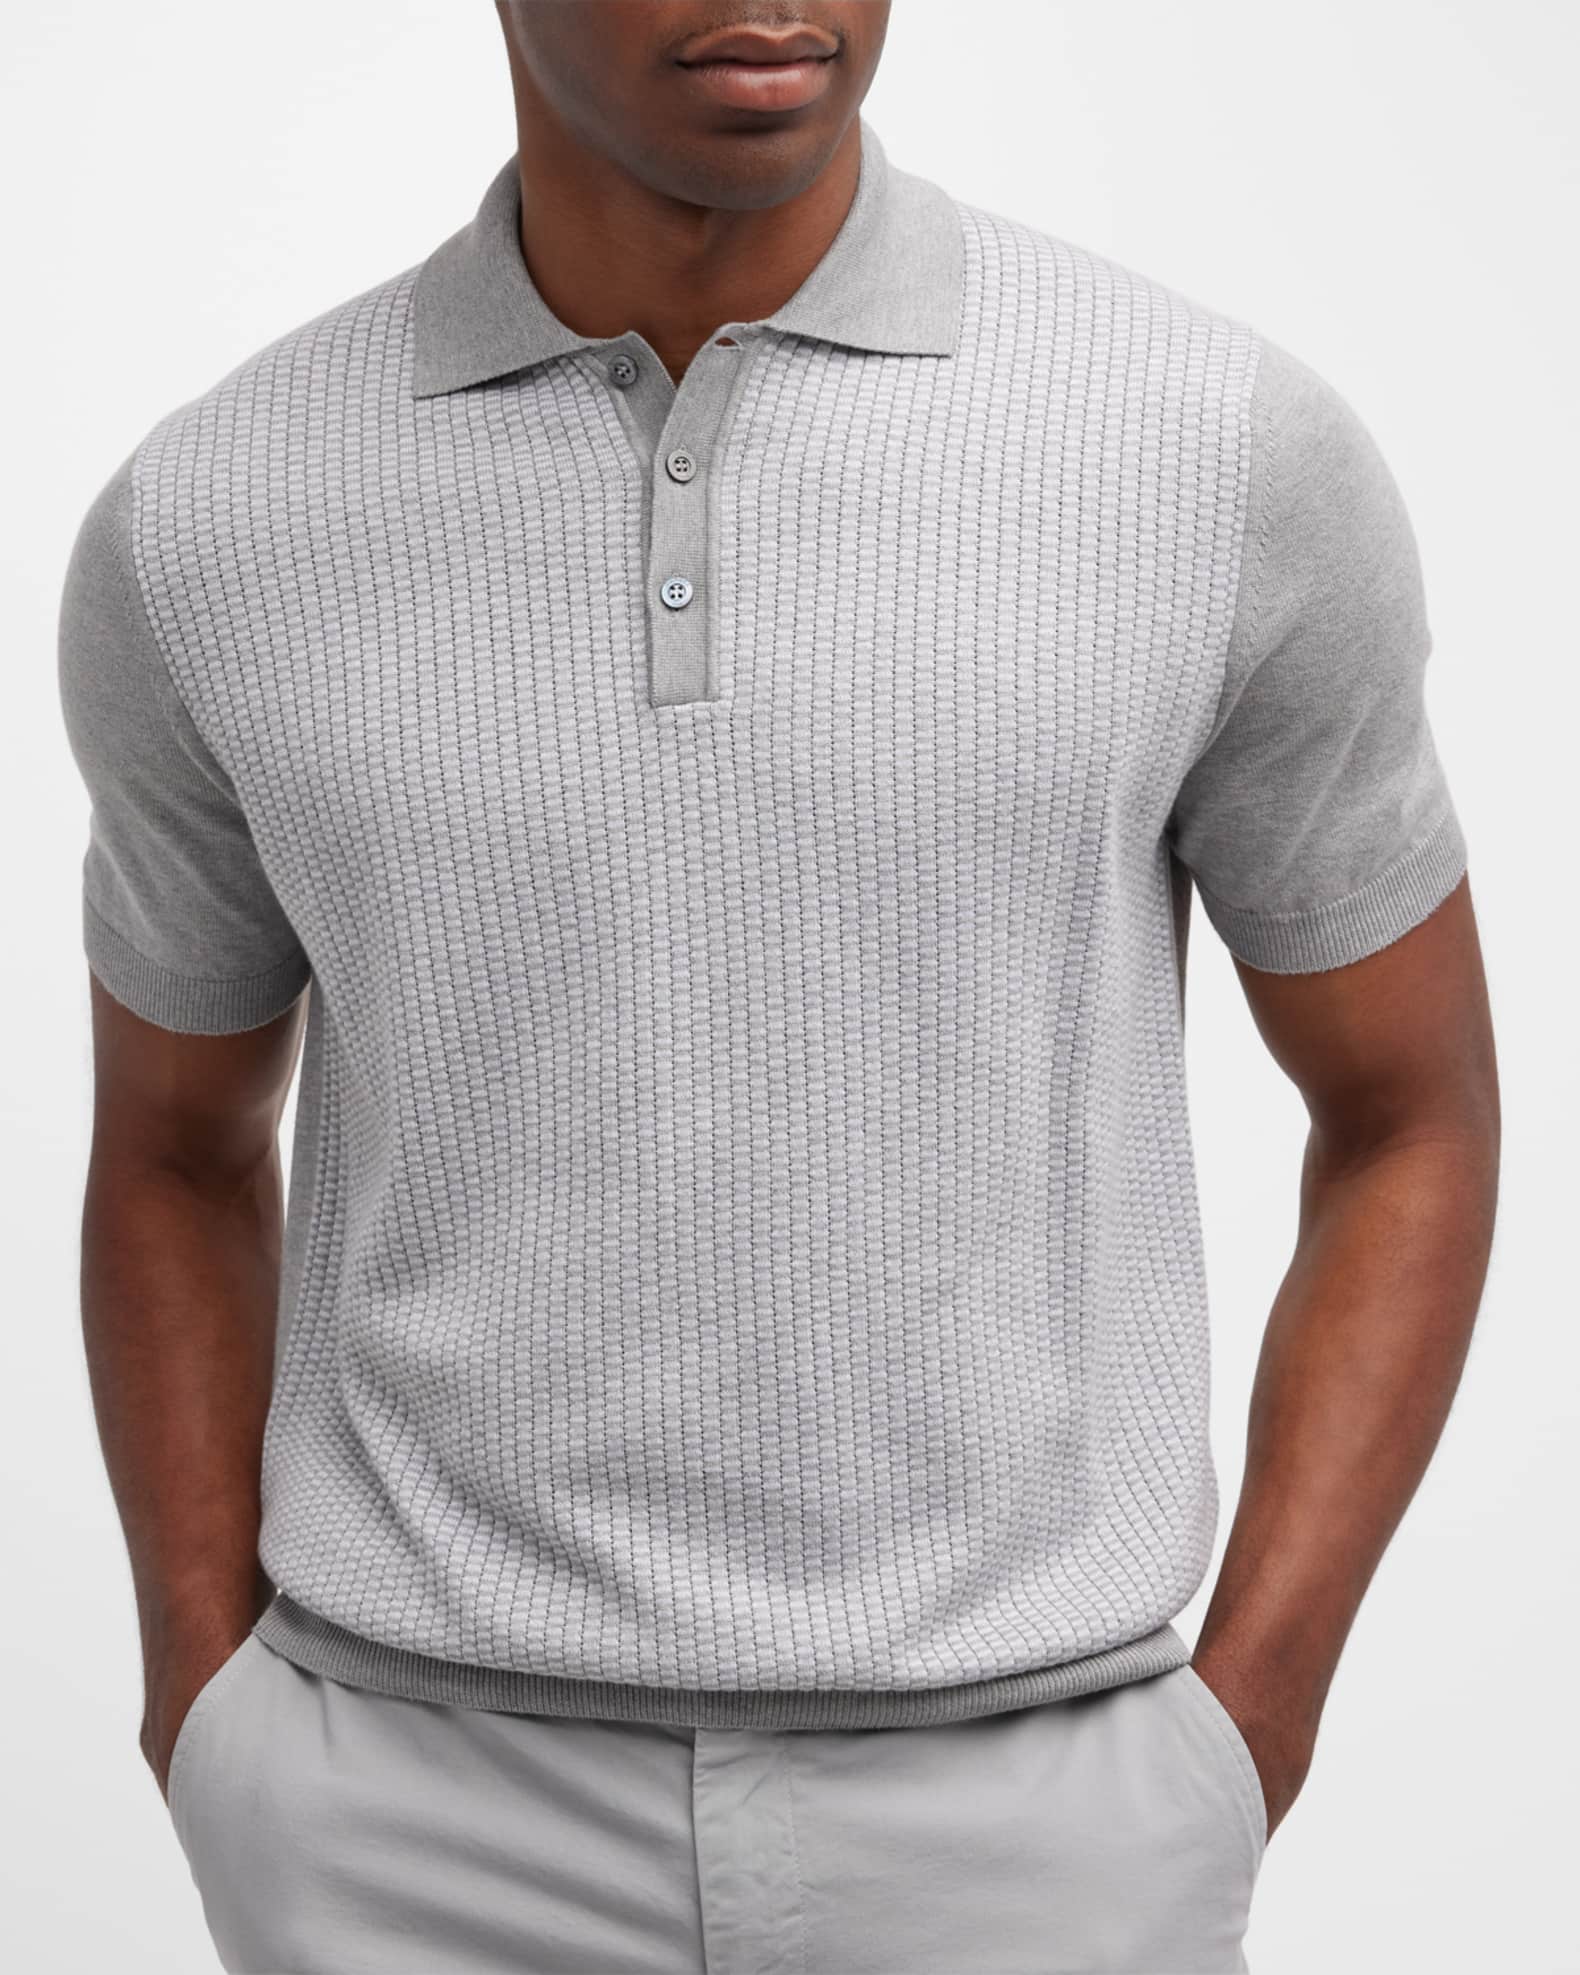 Jacquard-knit polo shirt with micro pattern